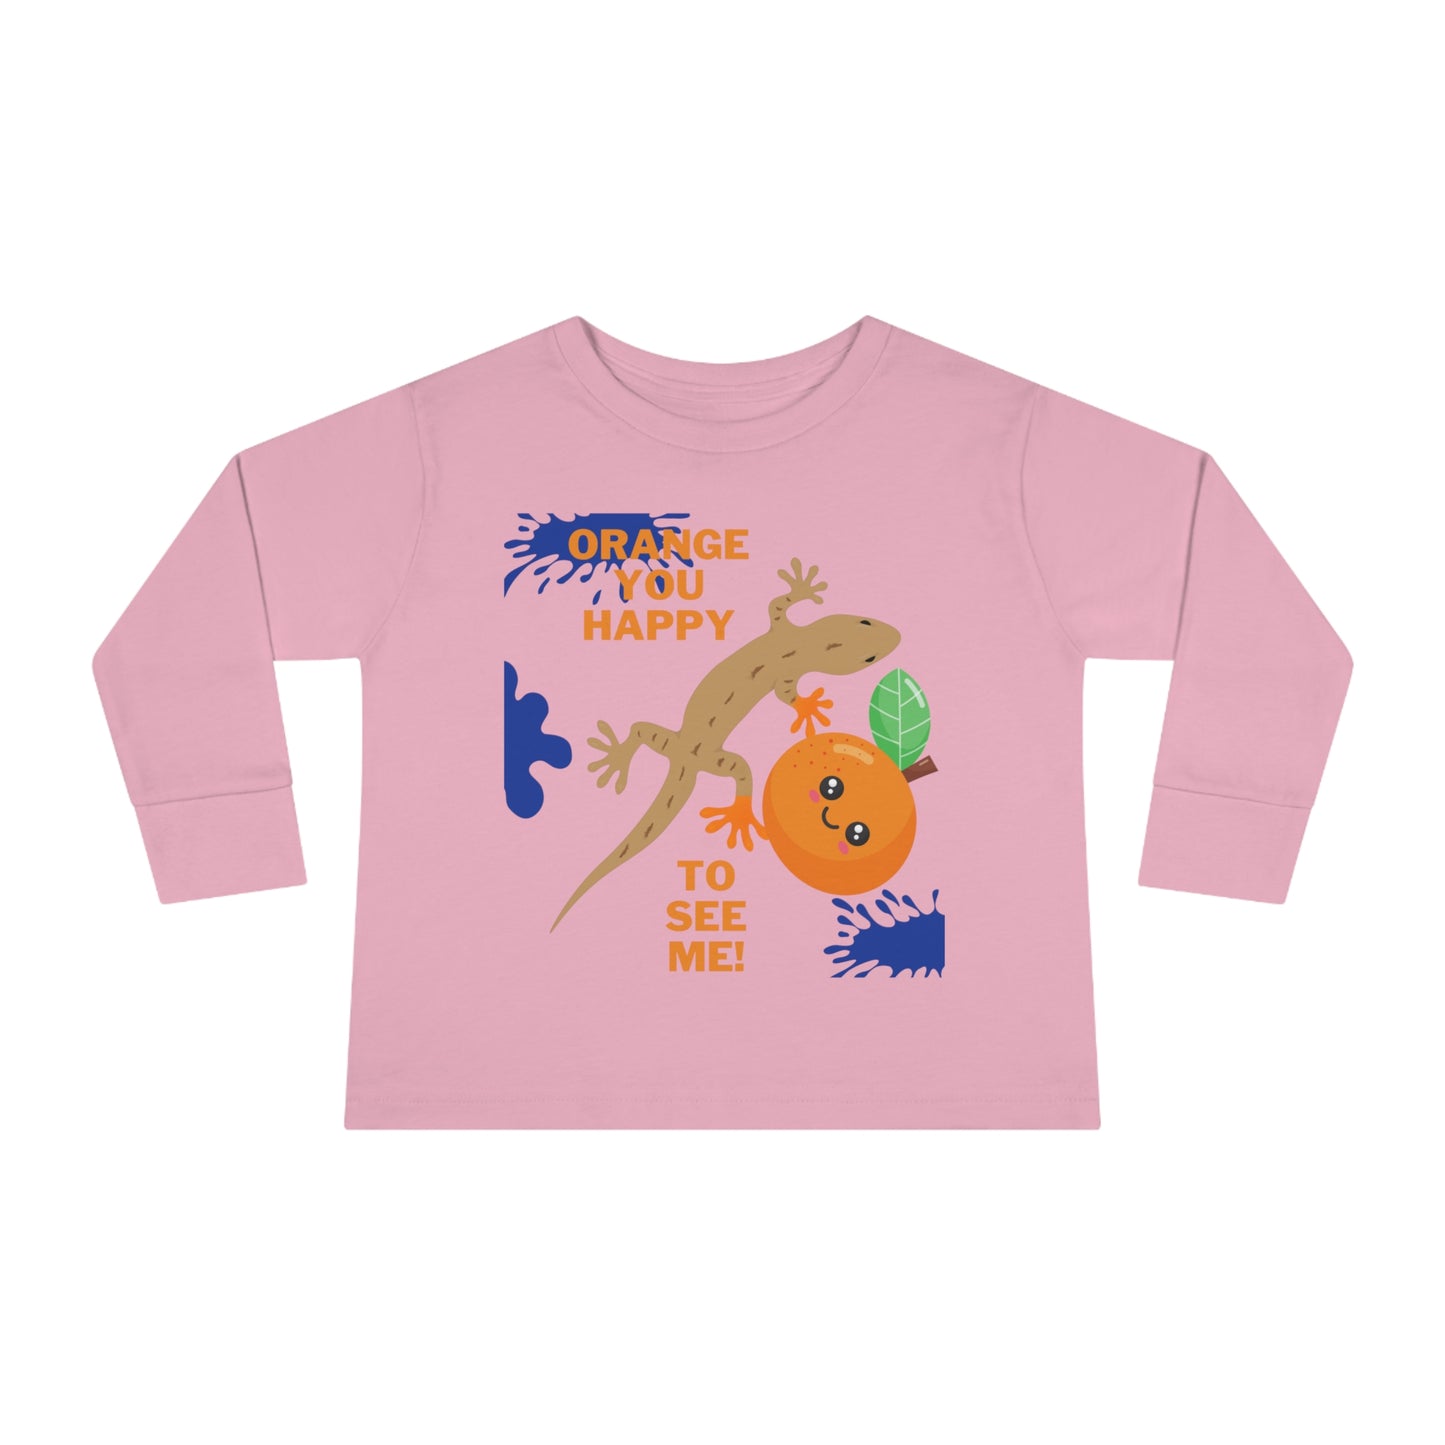 Toddler Long Sleeve Shirt: Orange You Glad to See Me